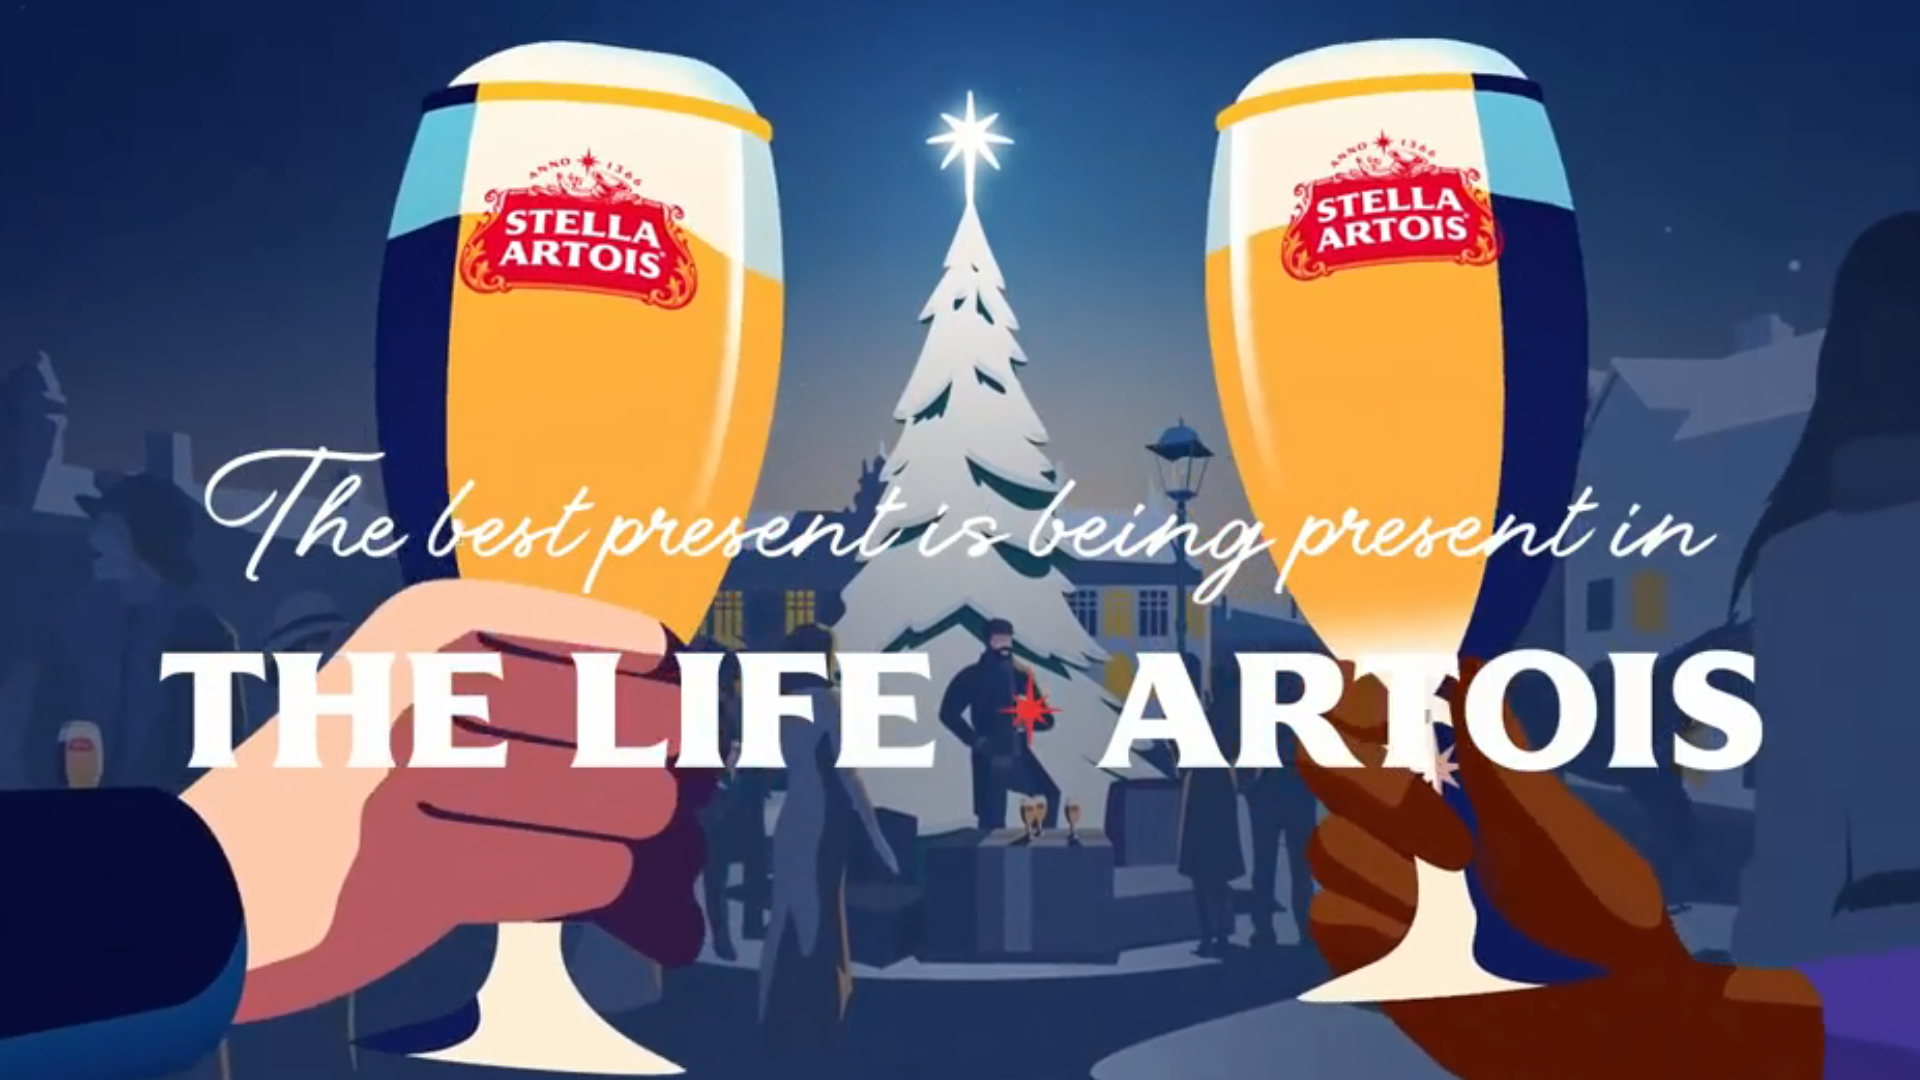 Stella Artois - Christmas advertisement for beer